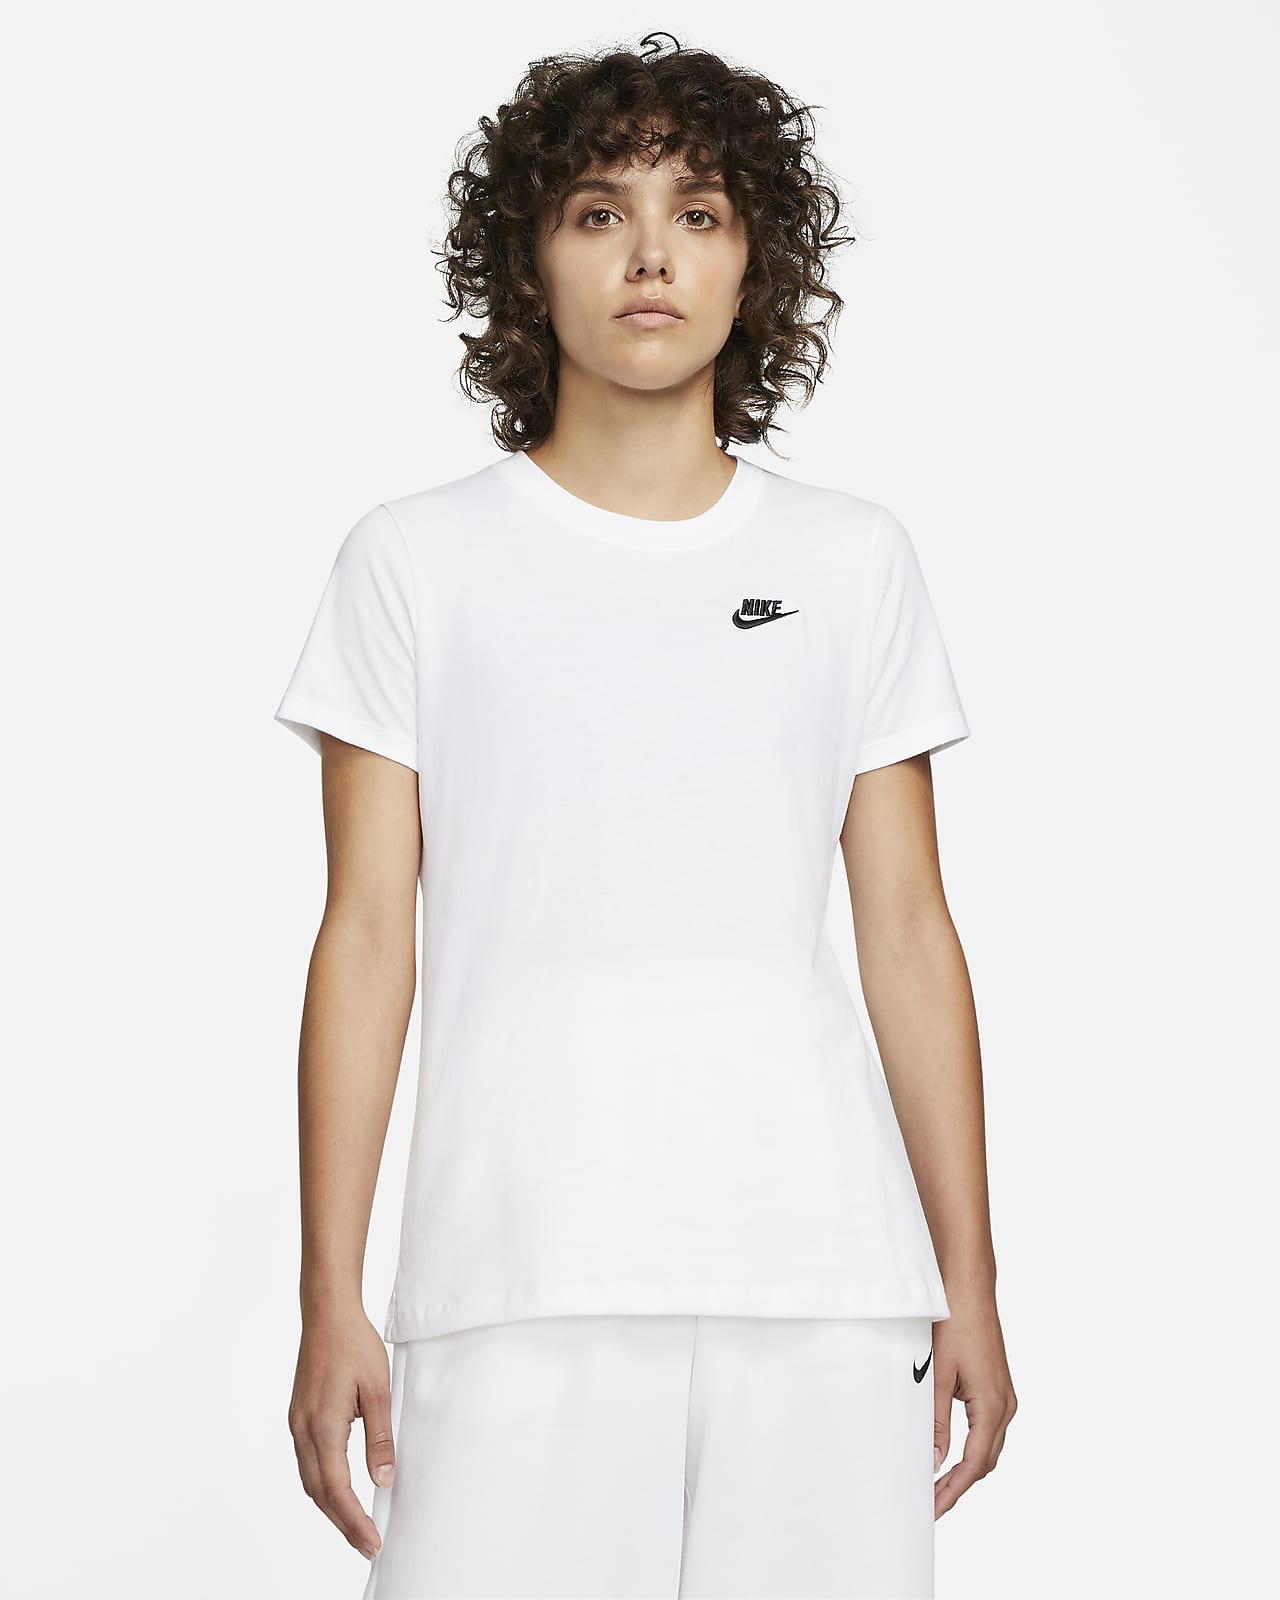 Flojamente podar muy agradable Nike Sportswear Camiseta club - Mujer. Nike ES